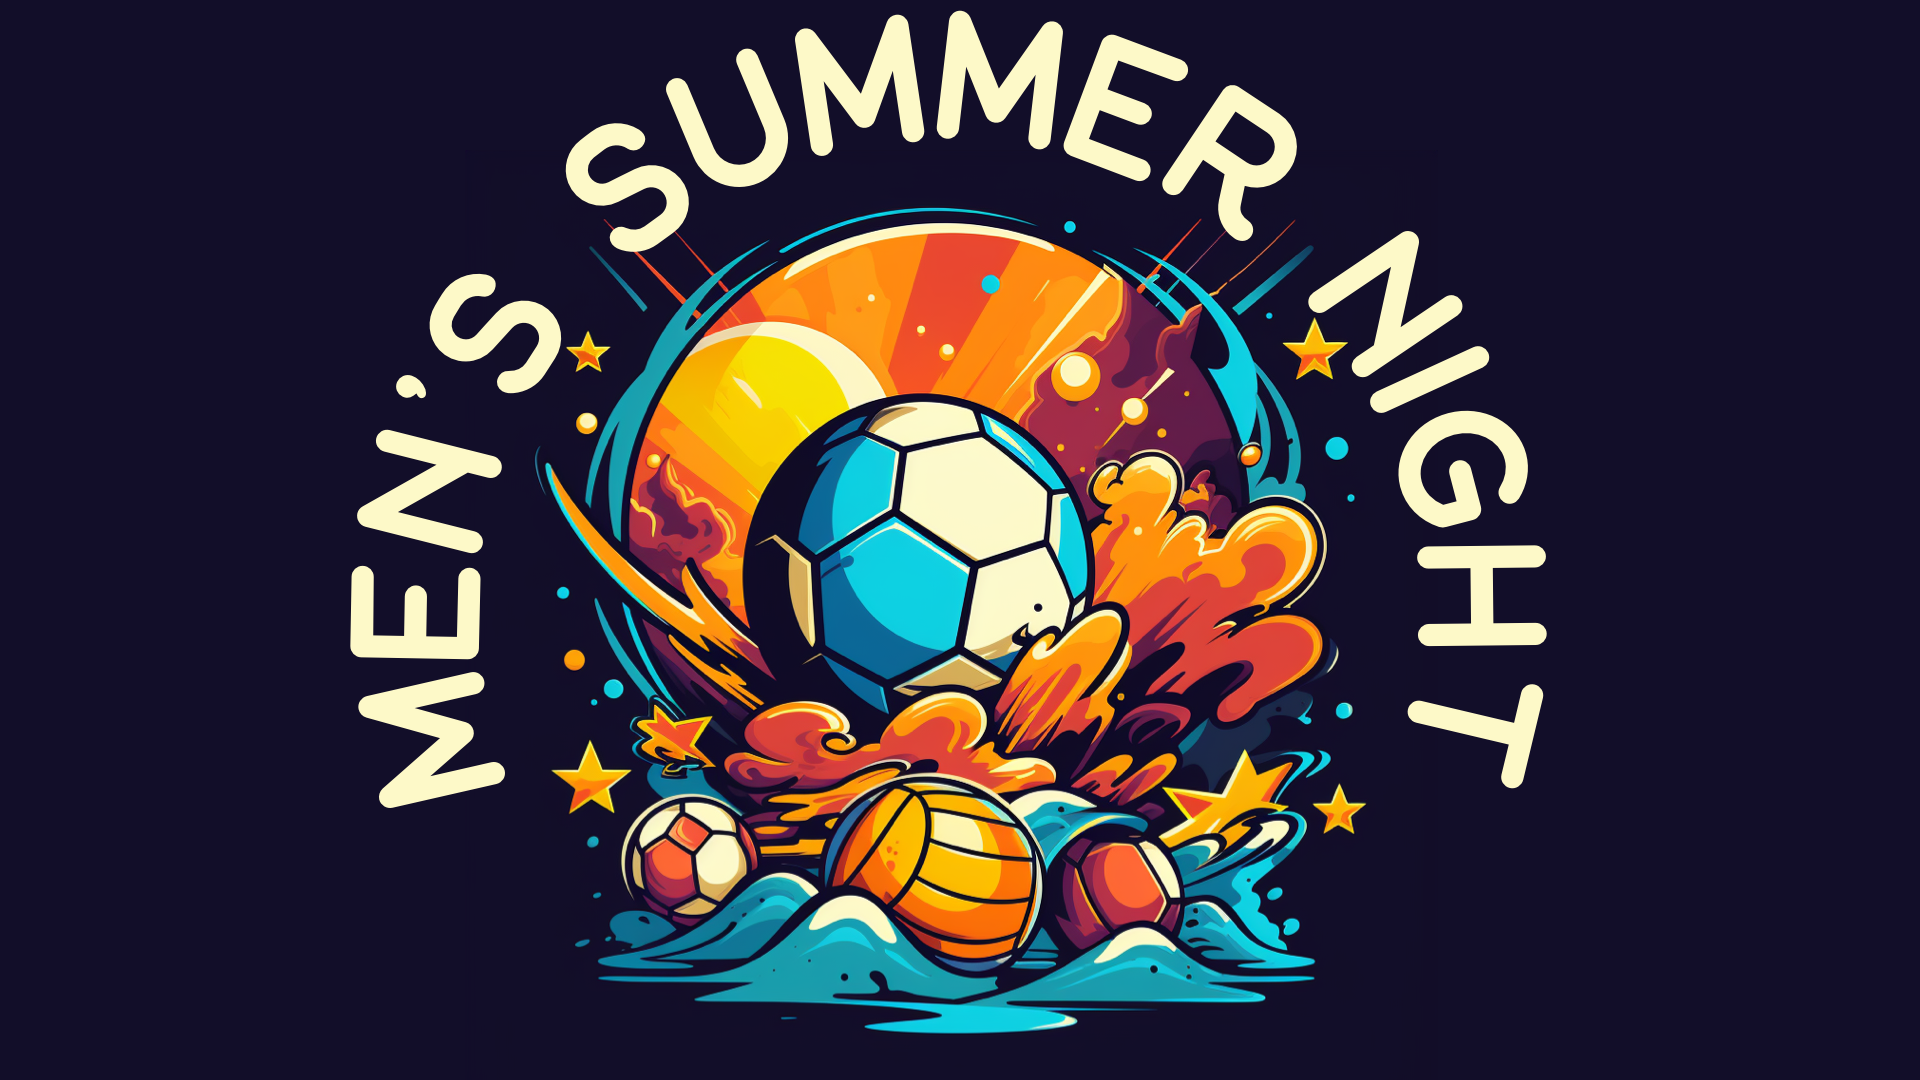 Men’s Summer Night.PNG image